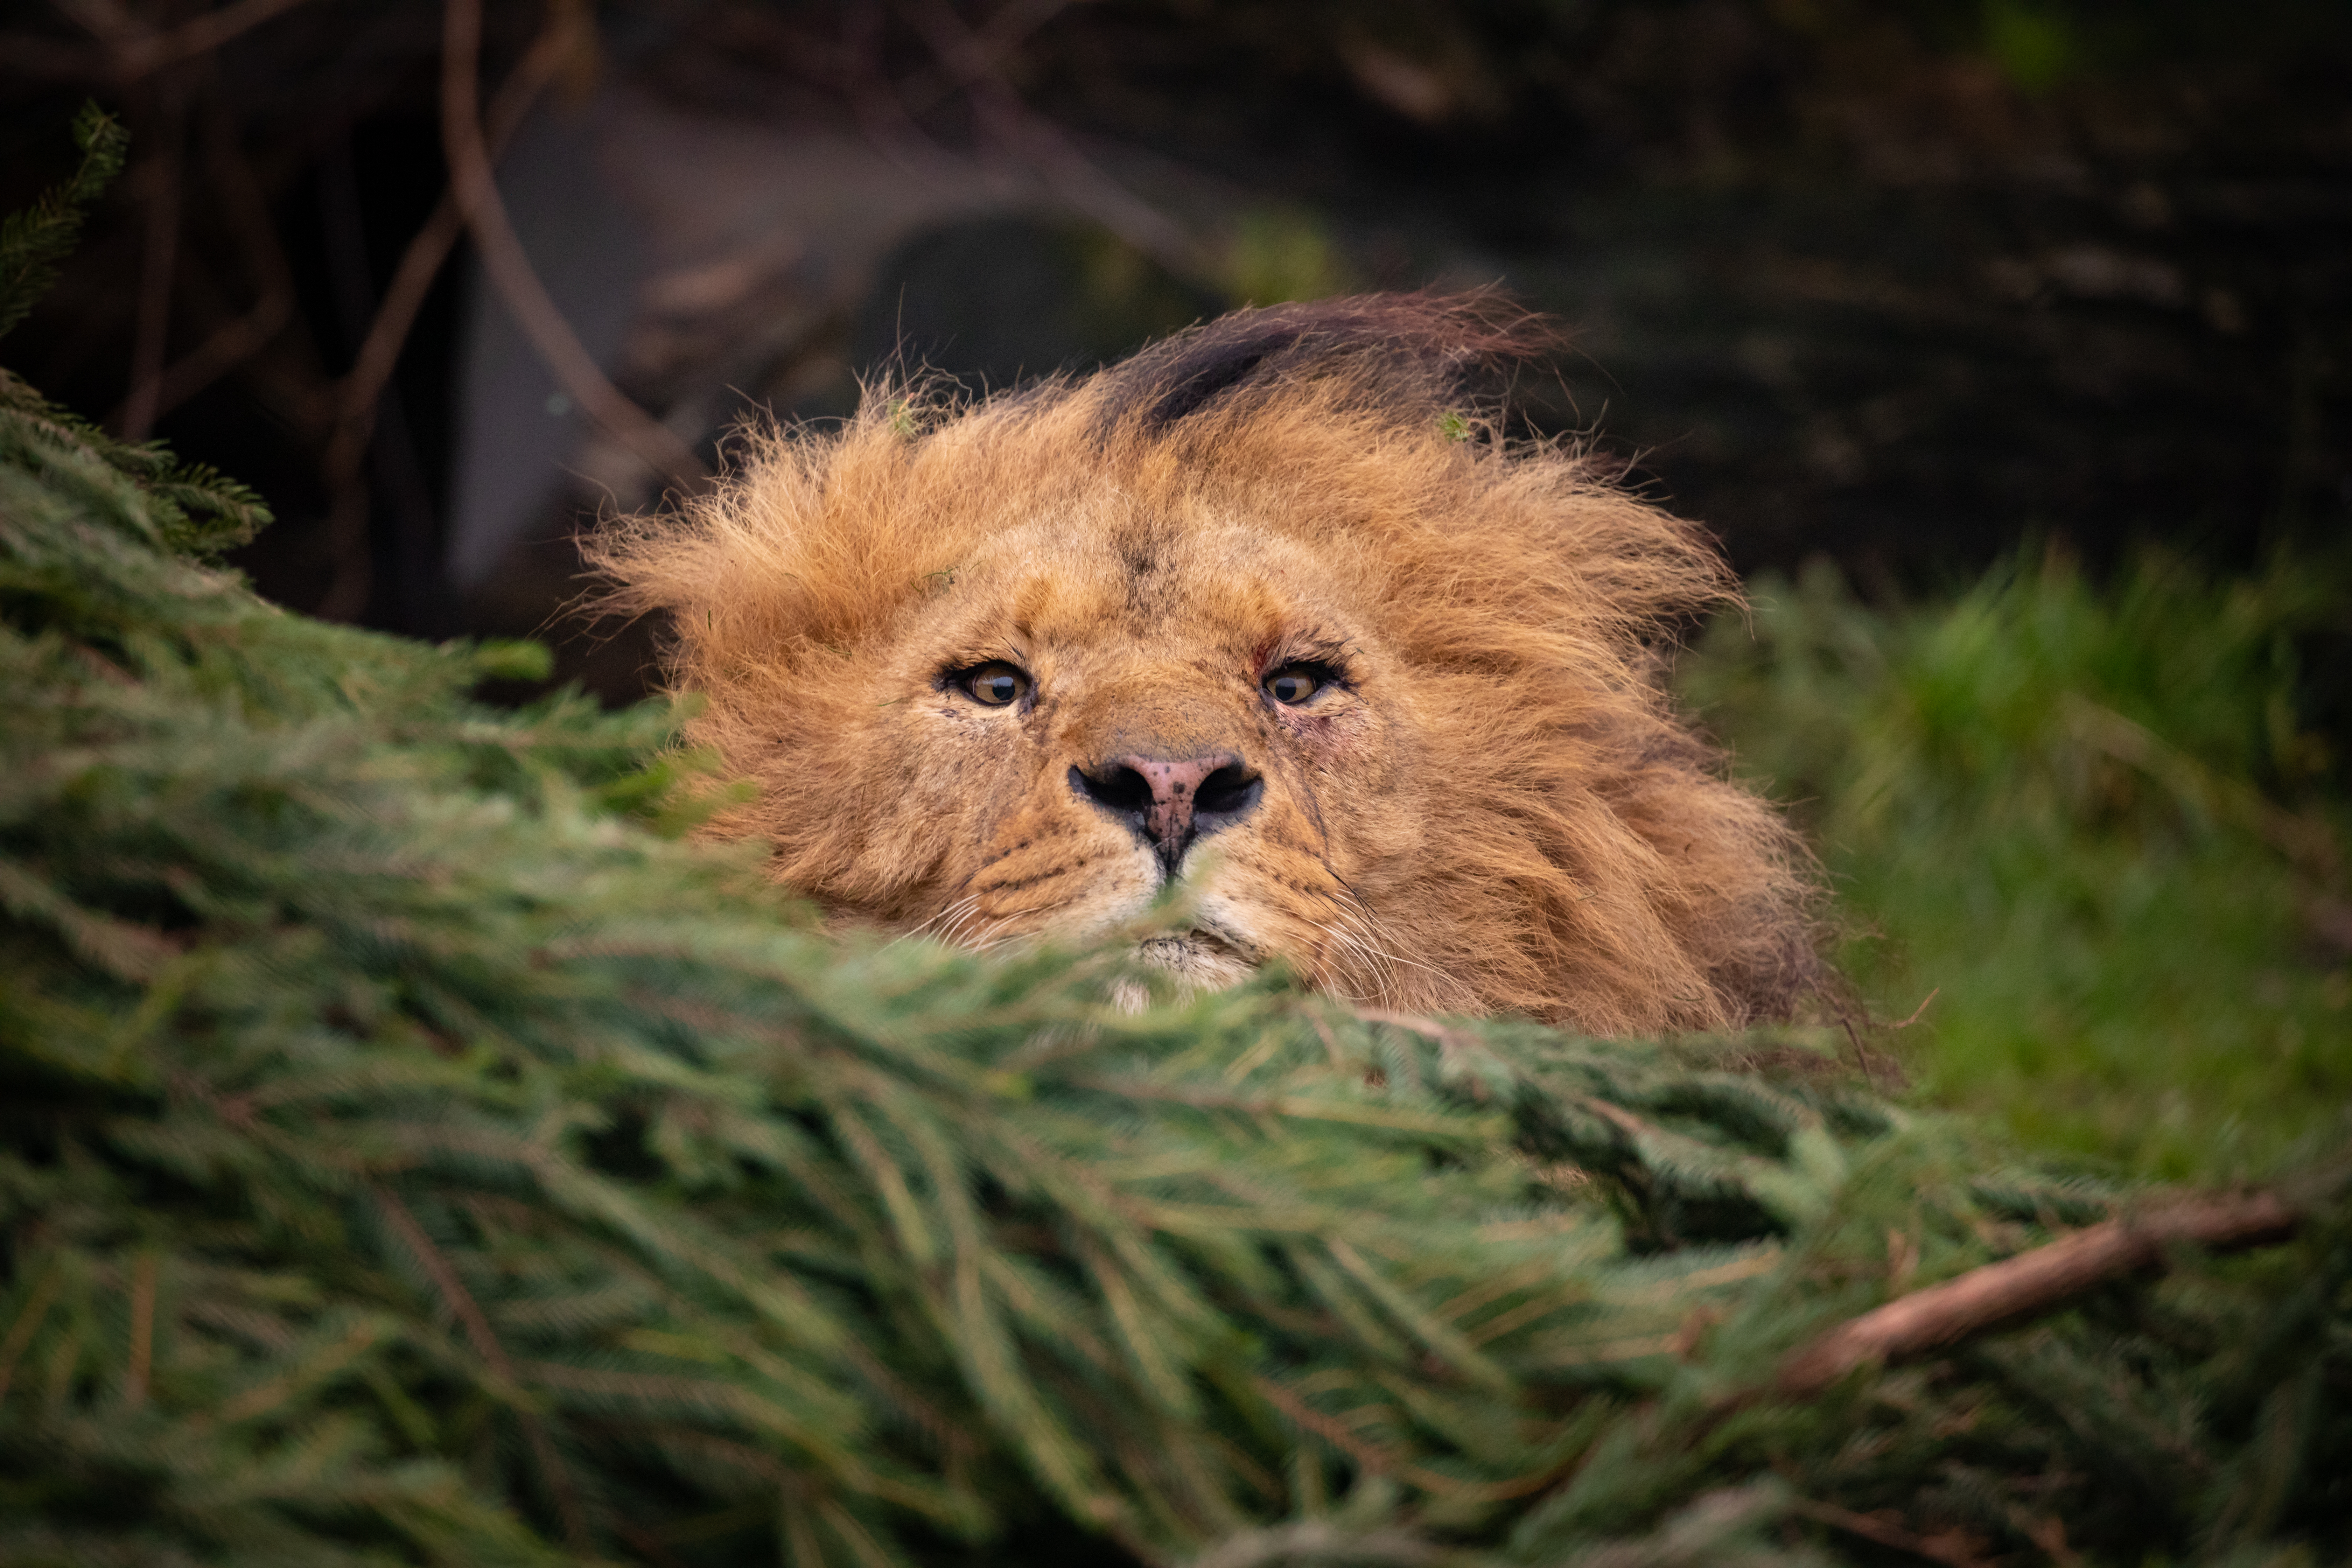 A male lion seen hiding amongst the pine trees.